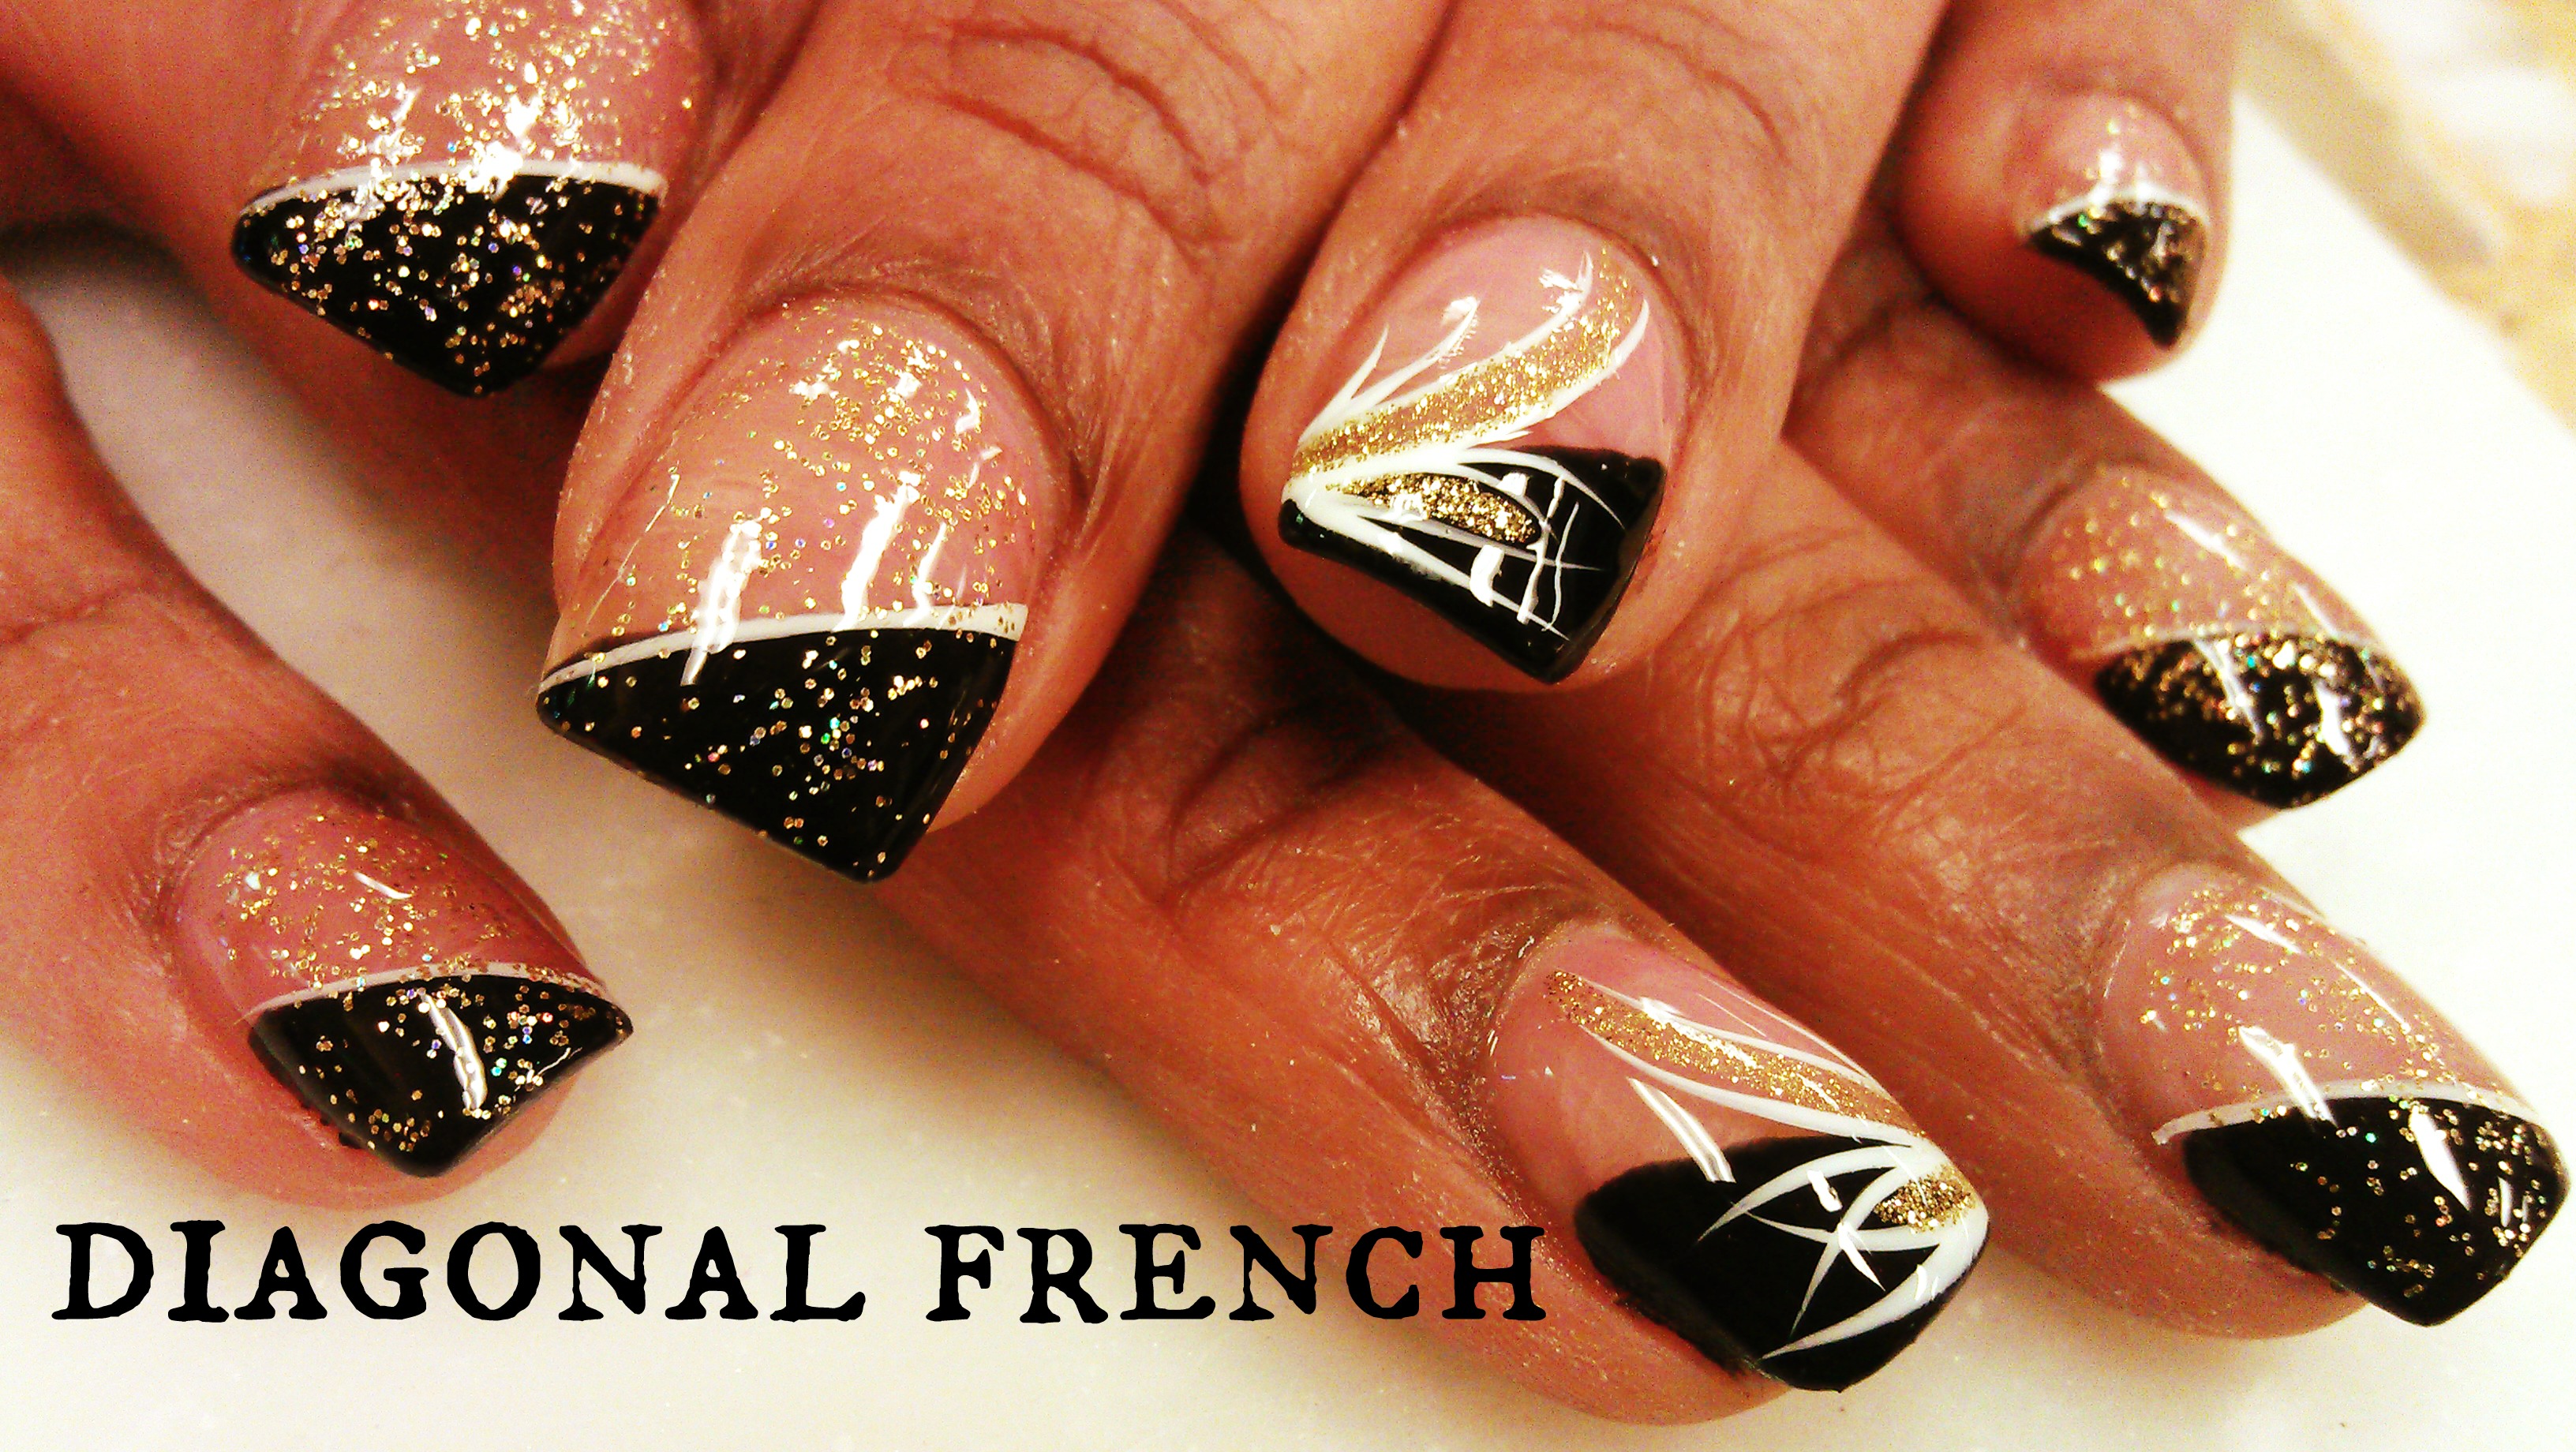 Diagonal French Manicure Nails | Acrylic Nails and Nail Art Design